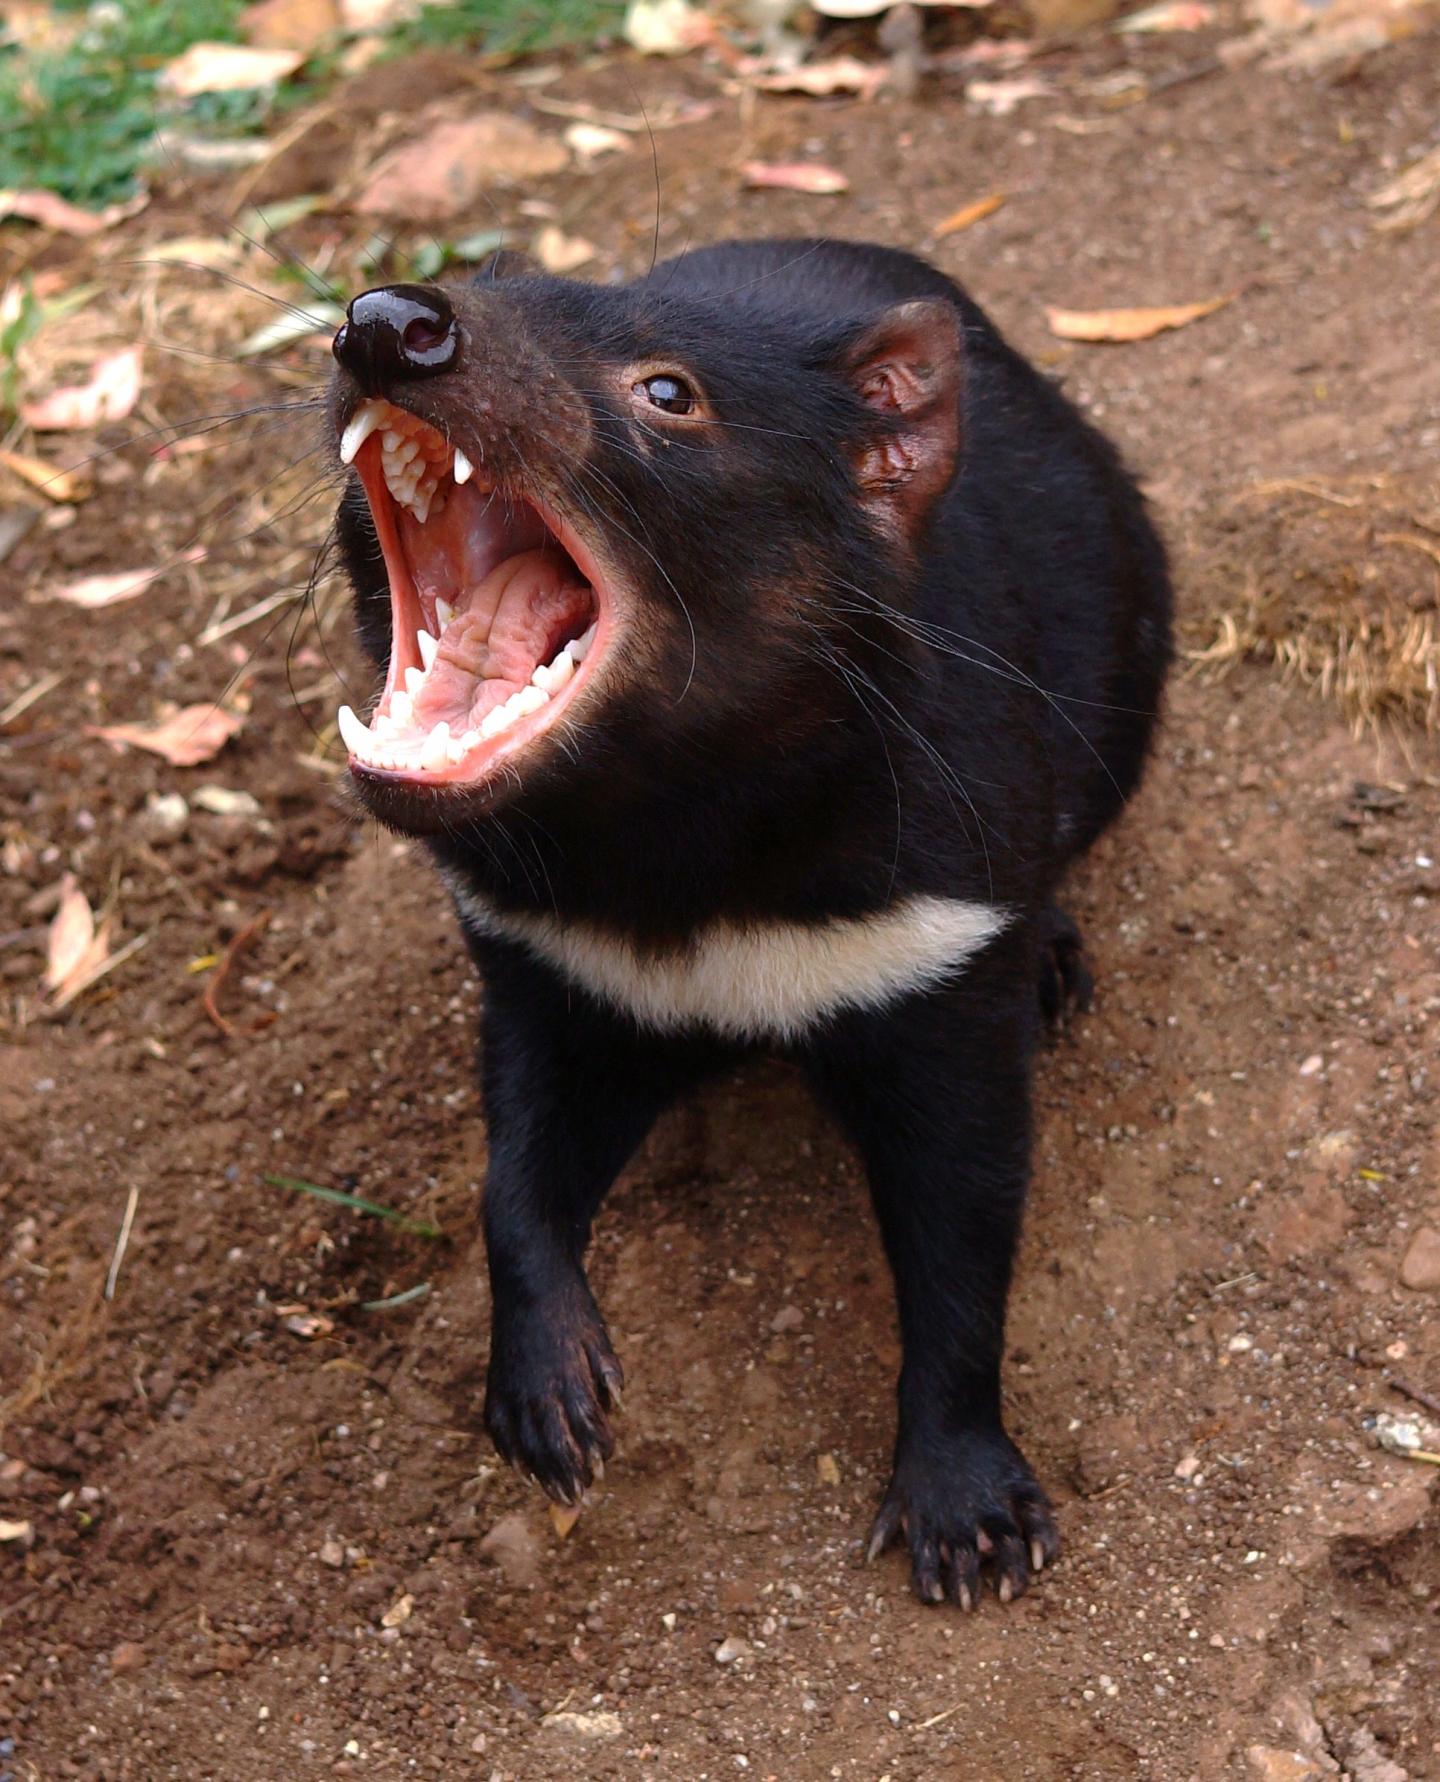 A Wild, Tasmanian Devil Bares Its Teeth